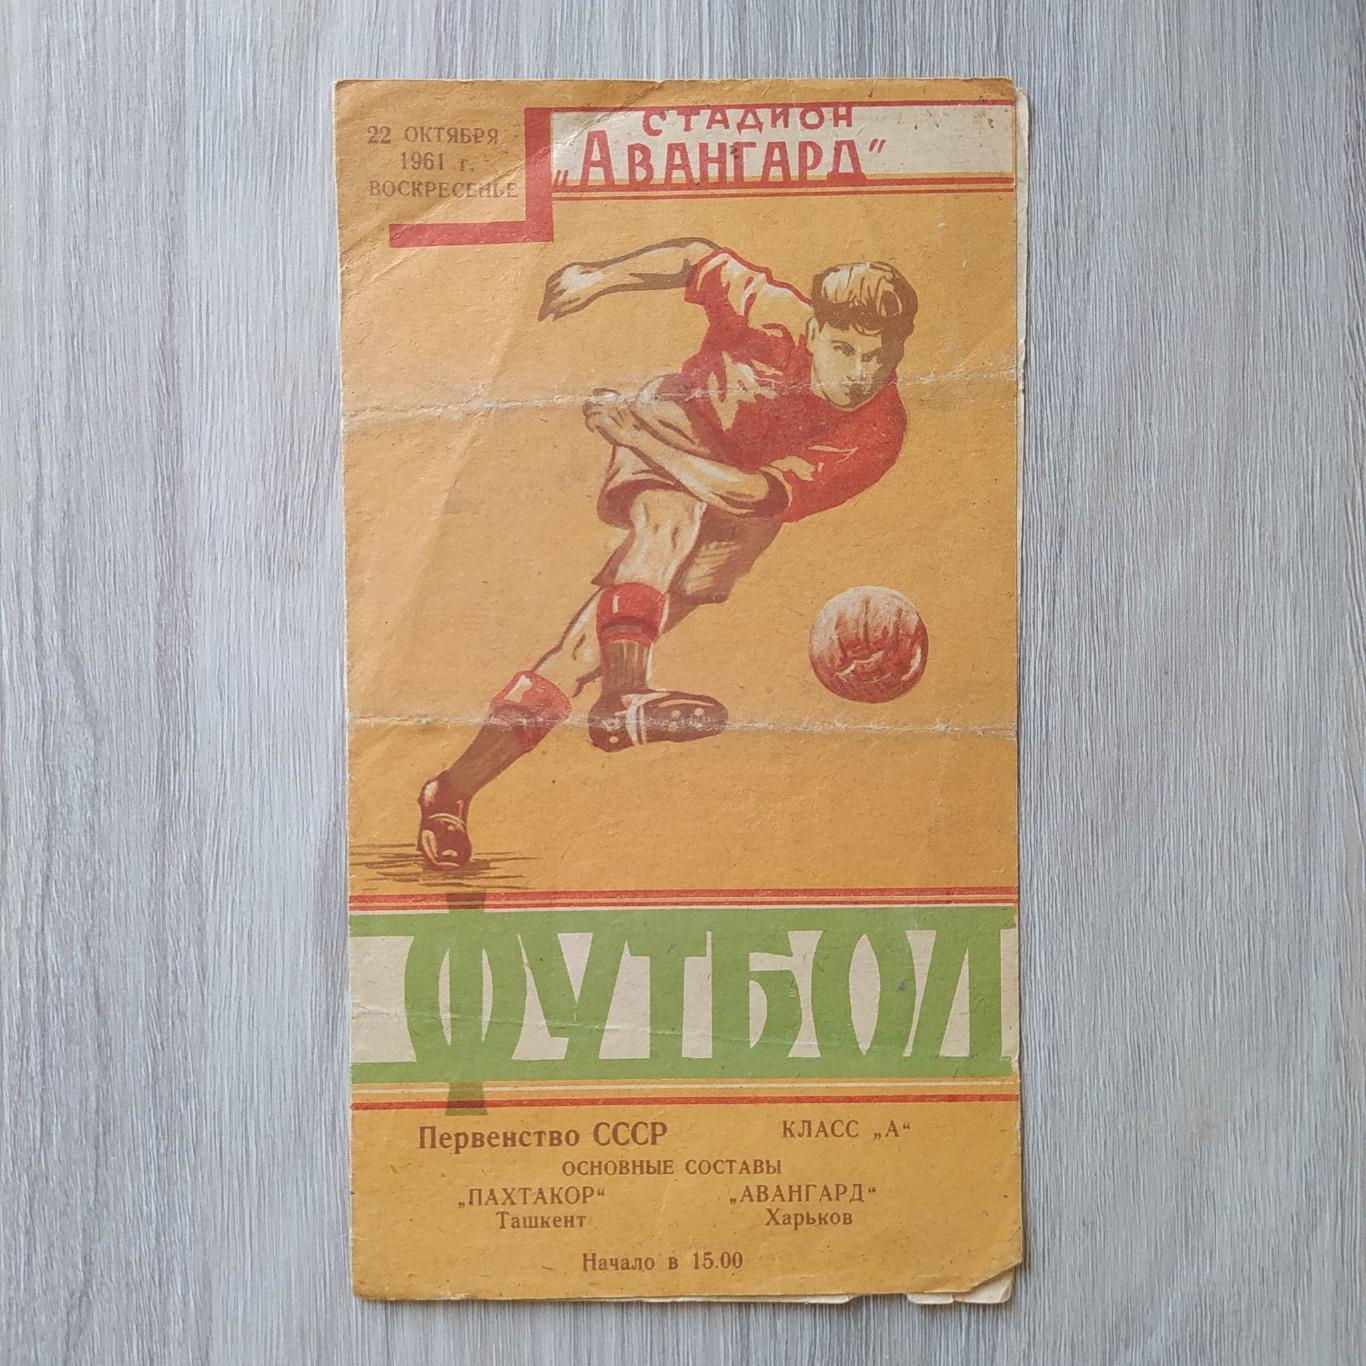 Авангард Харьков – Пахтакор Ташкент 22.10.1961